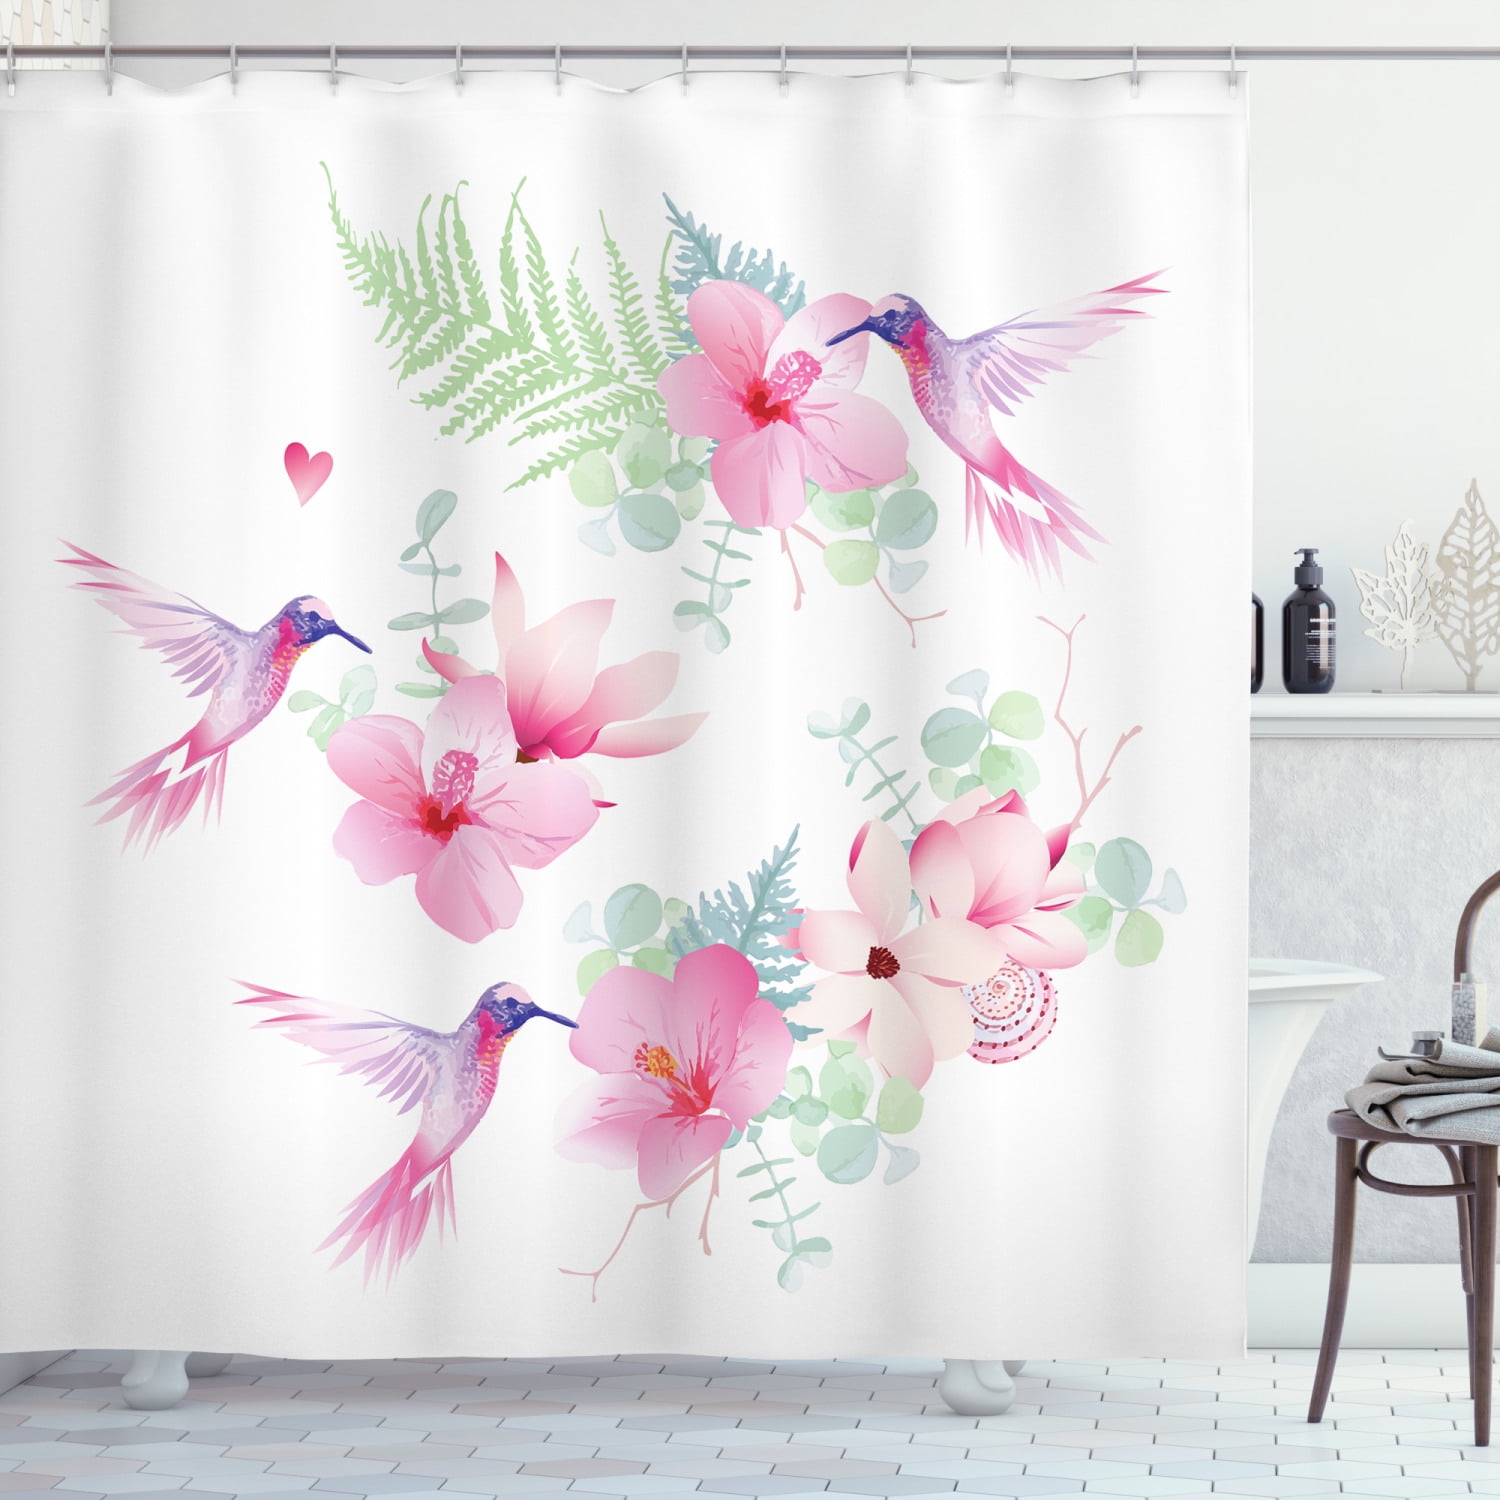 Spring Watercolor Flowers Hummingbird Shower Curtain Sets For Bathroom Decor 